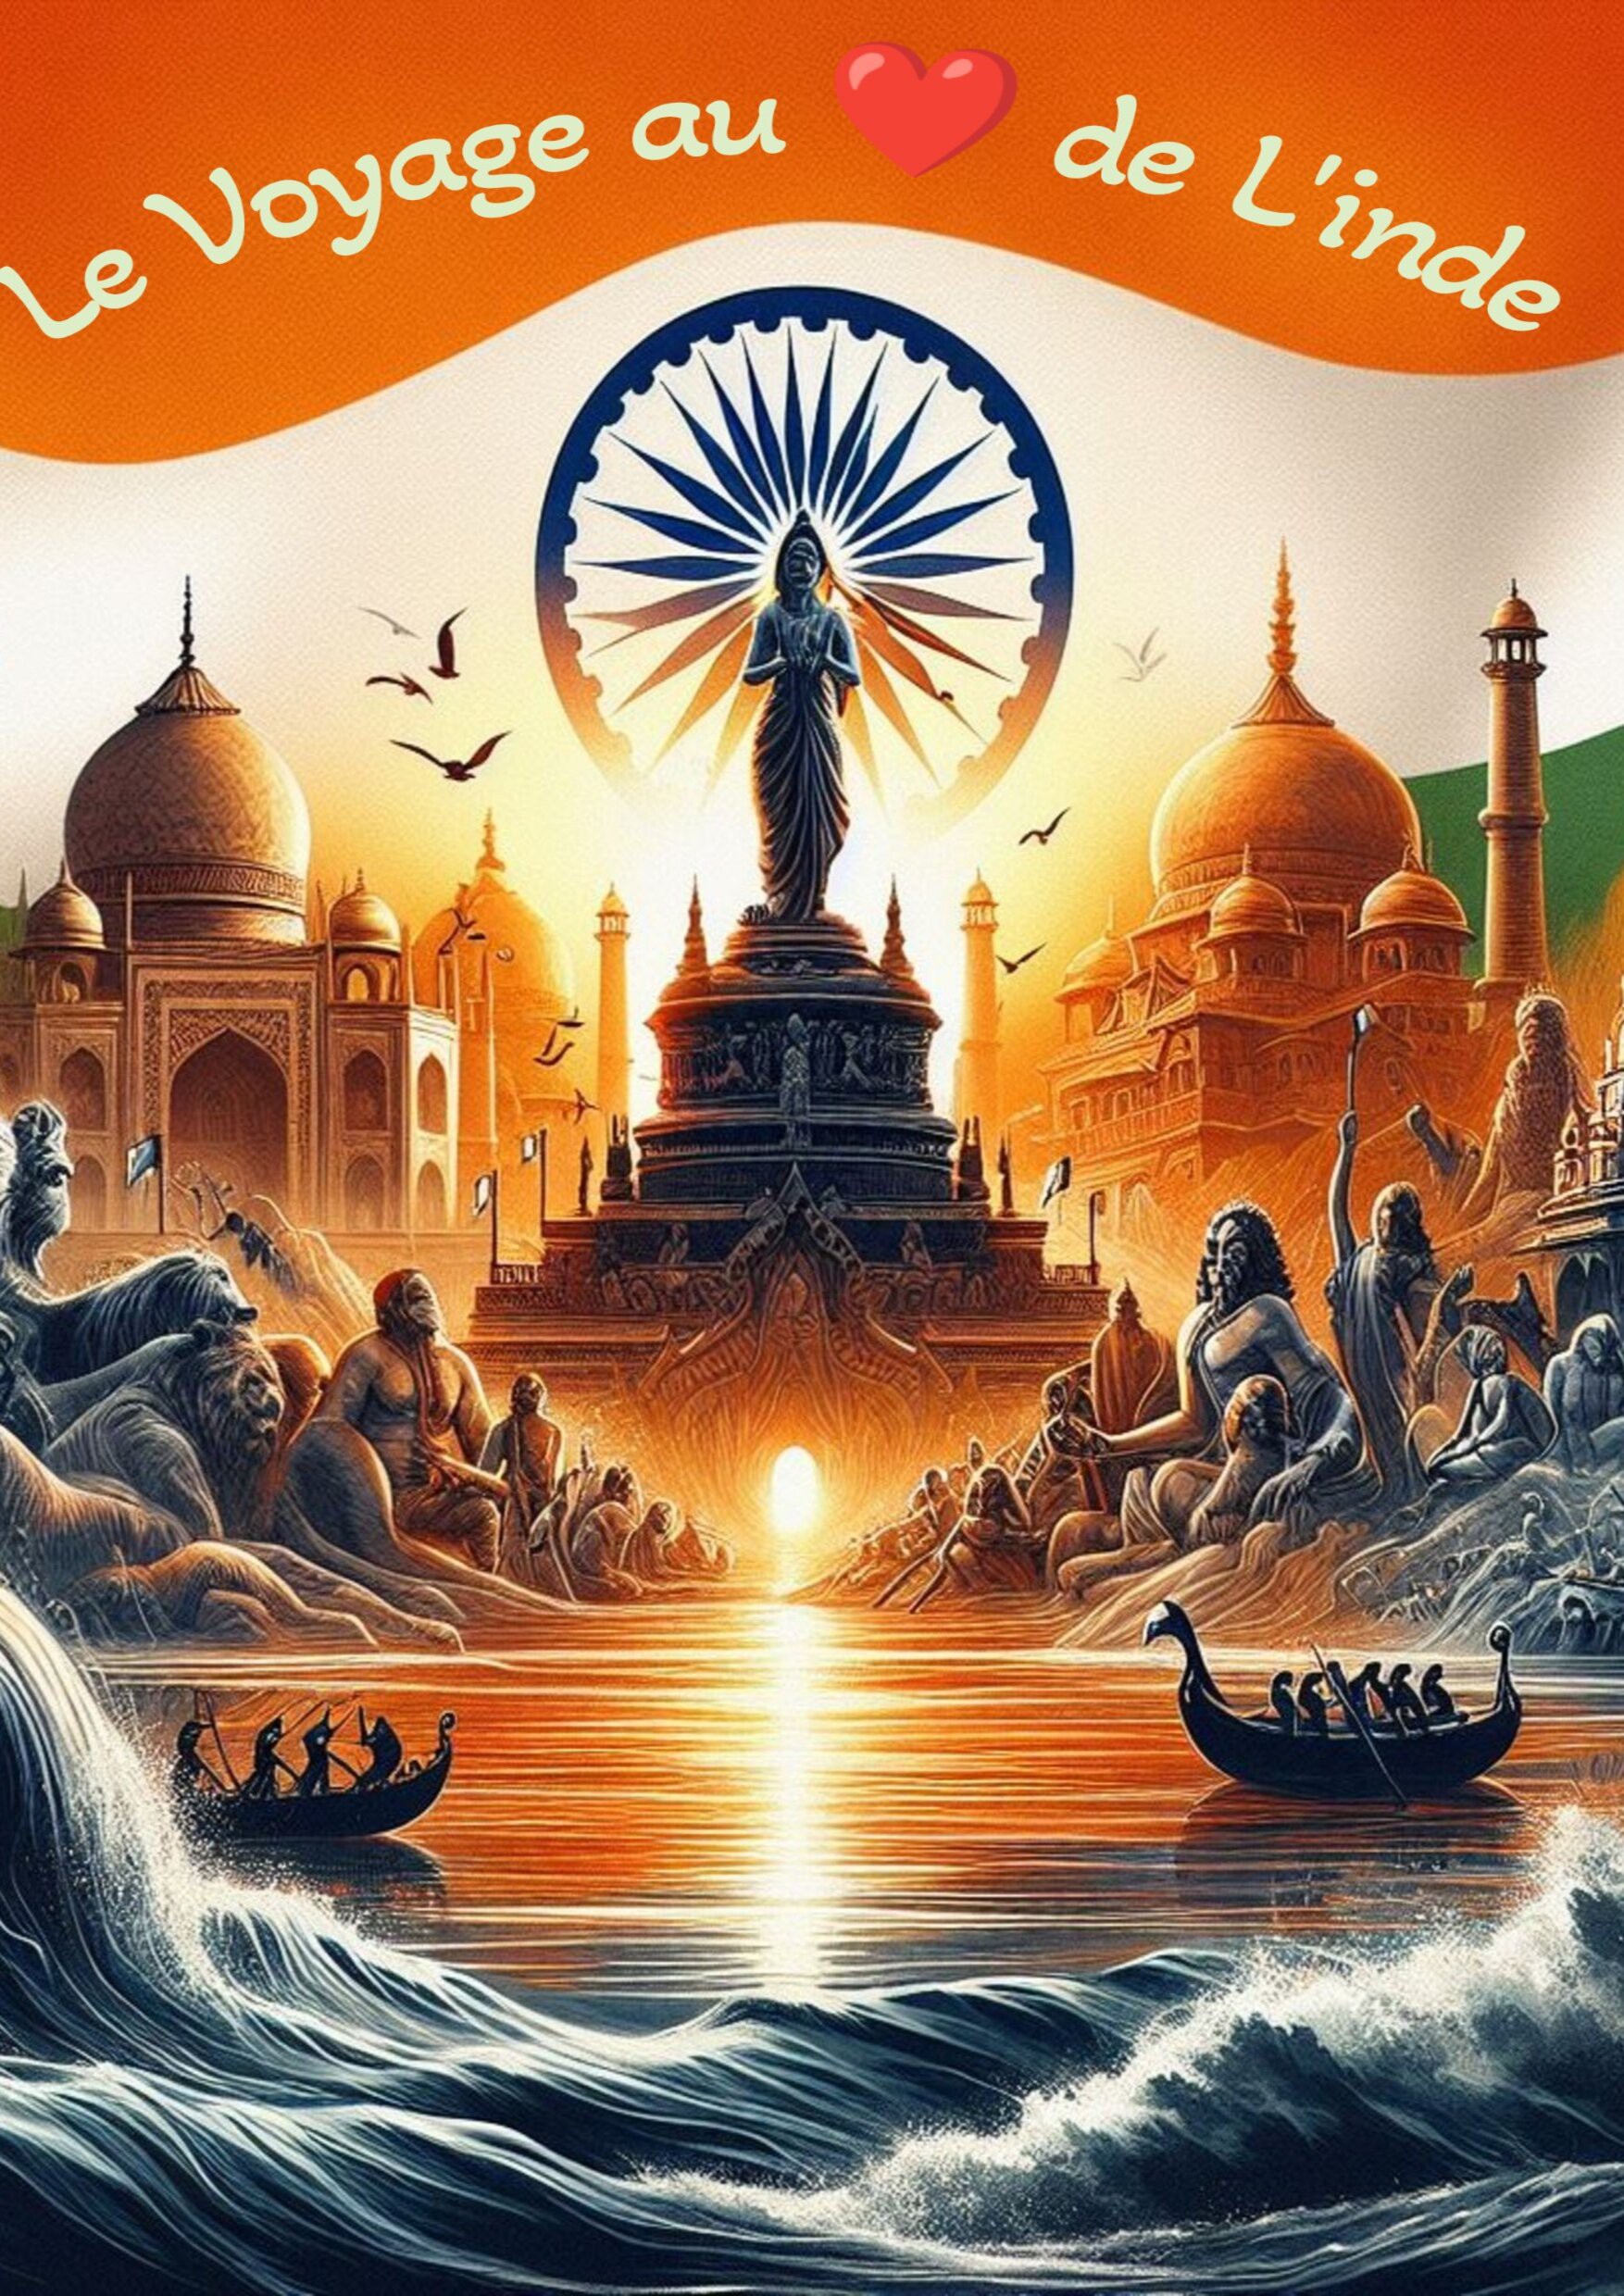 Le Voyage au coeur de l'Inde